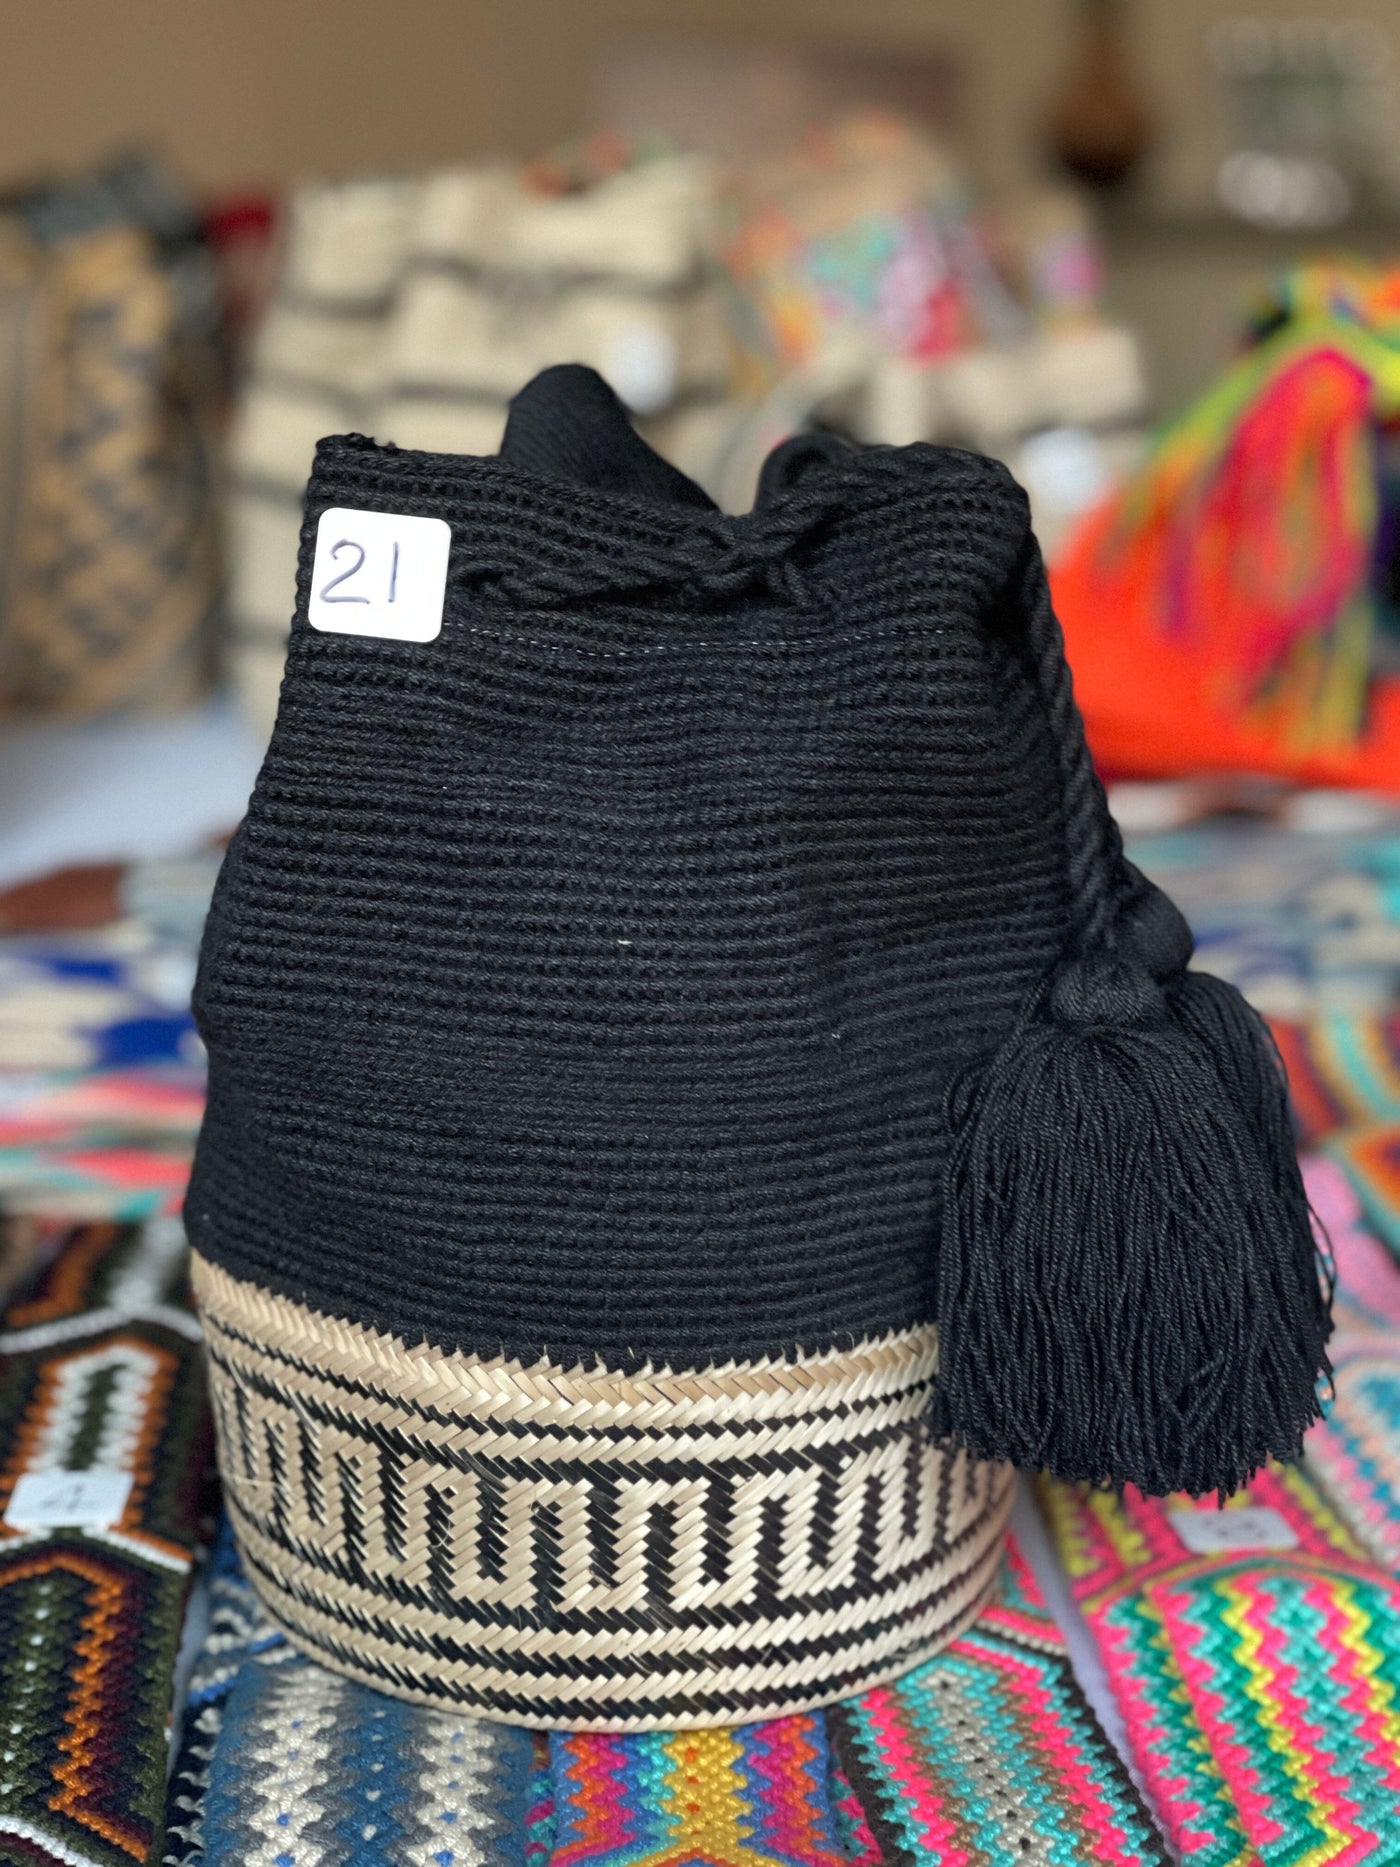 New Arrivals -Large Bohemian Bags & Special Edition Crochet Bags Crossbody Crochet Boho Bag - Traditional Wayuu Design #21 Black Straw Bottom 